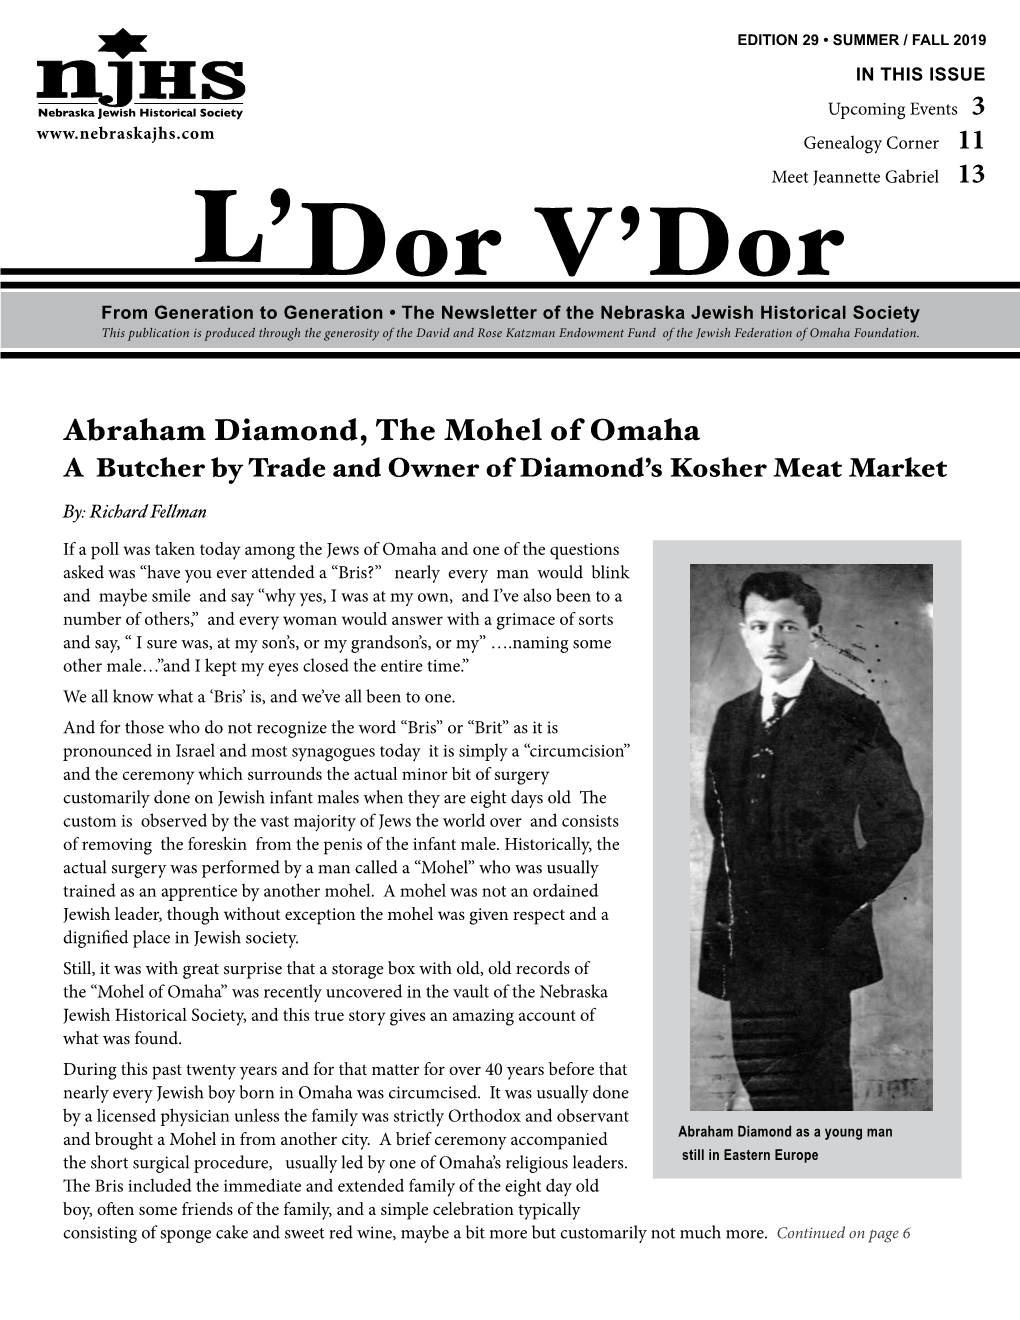 Abraham Diamond, the Mohel of Omaha